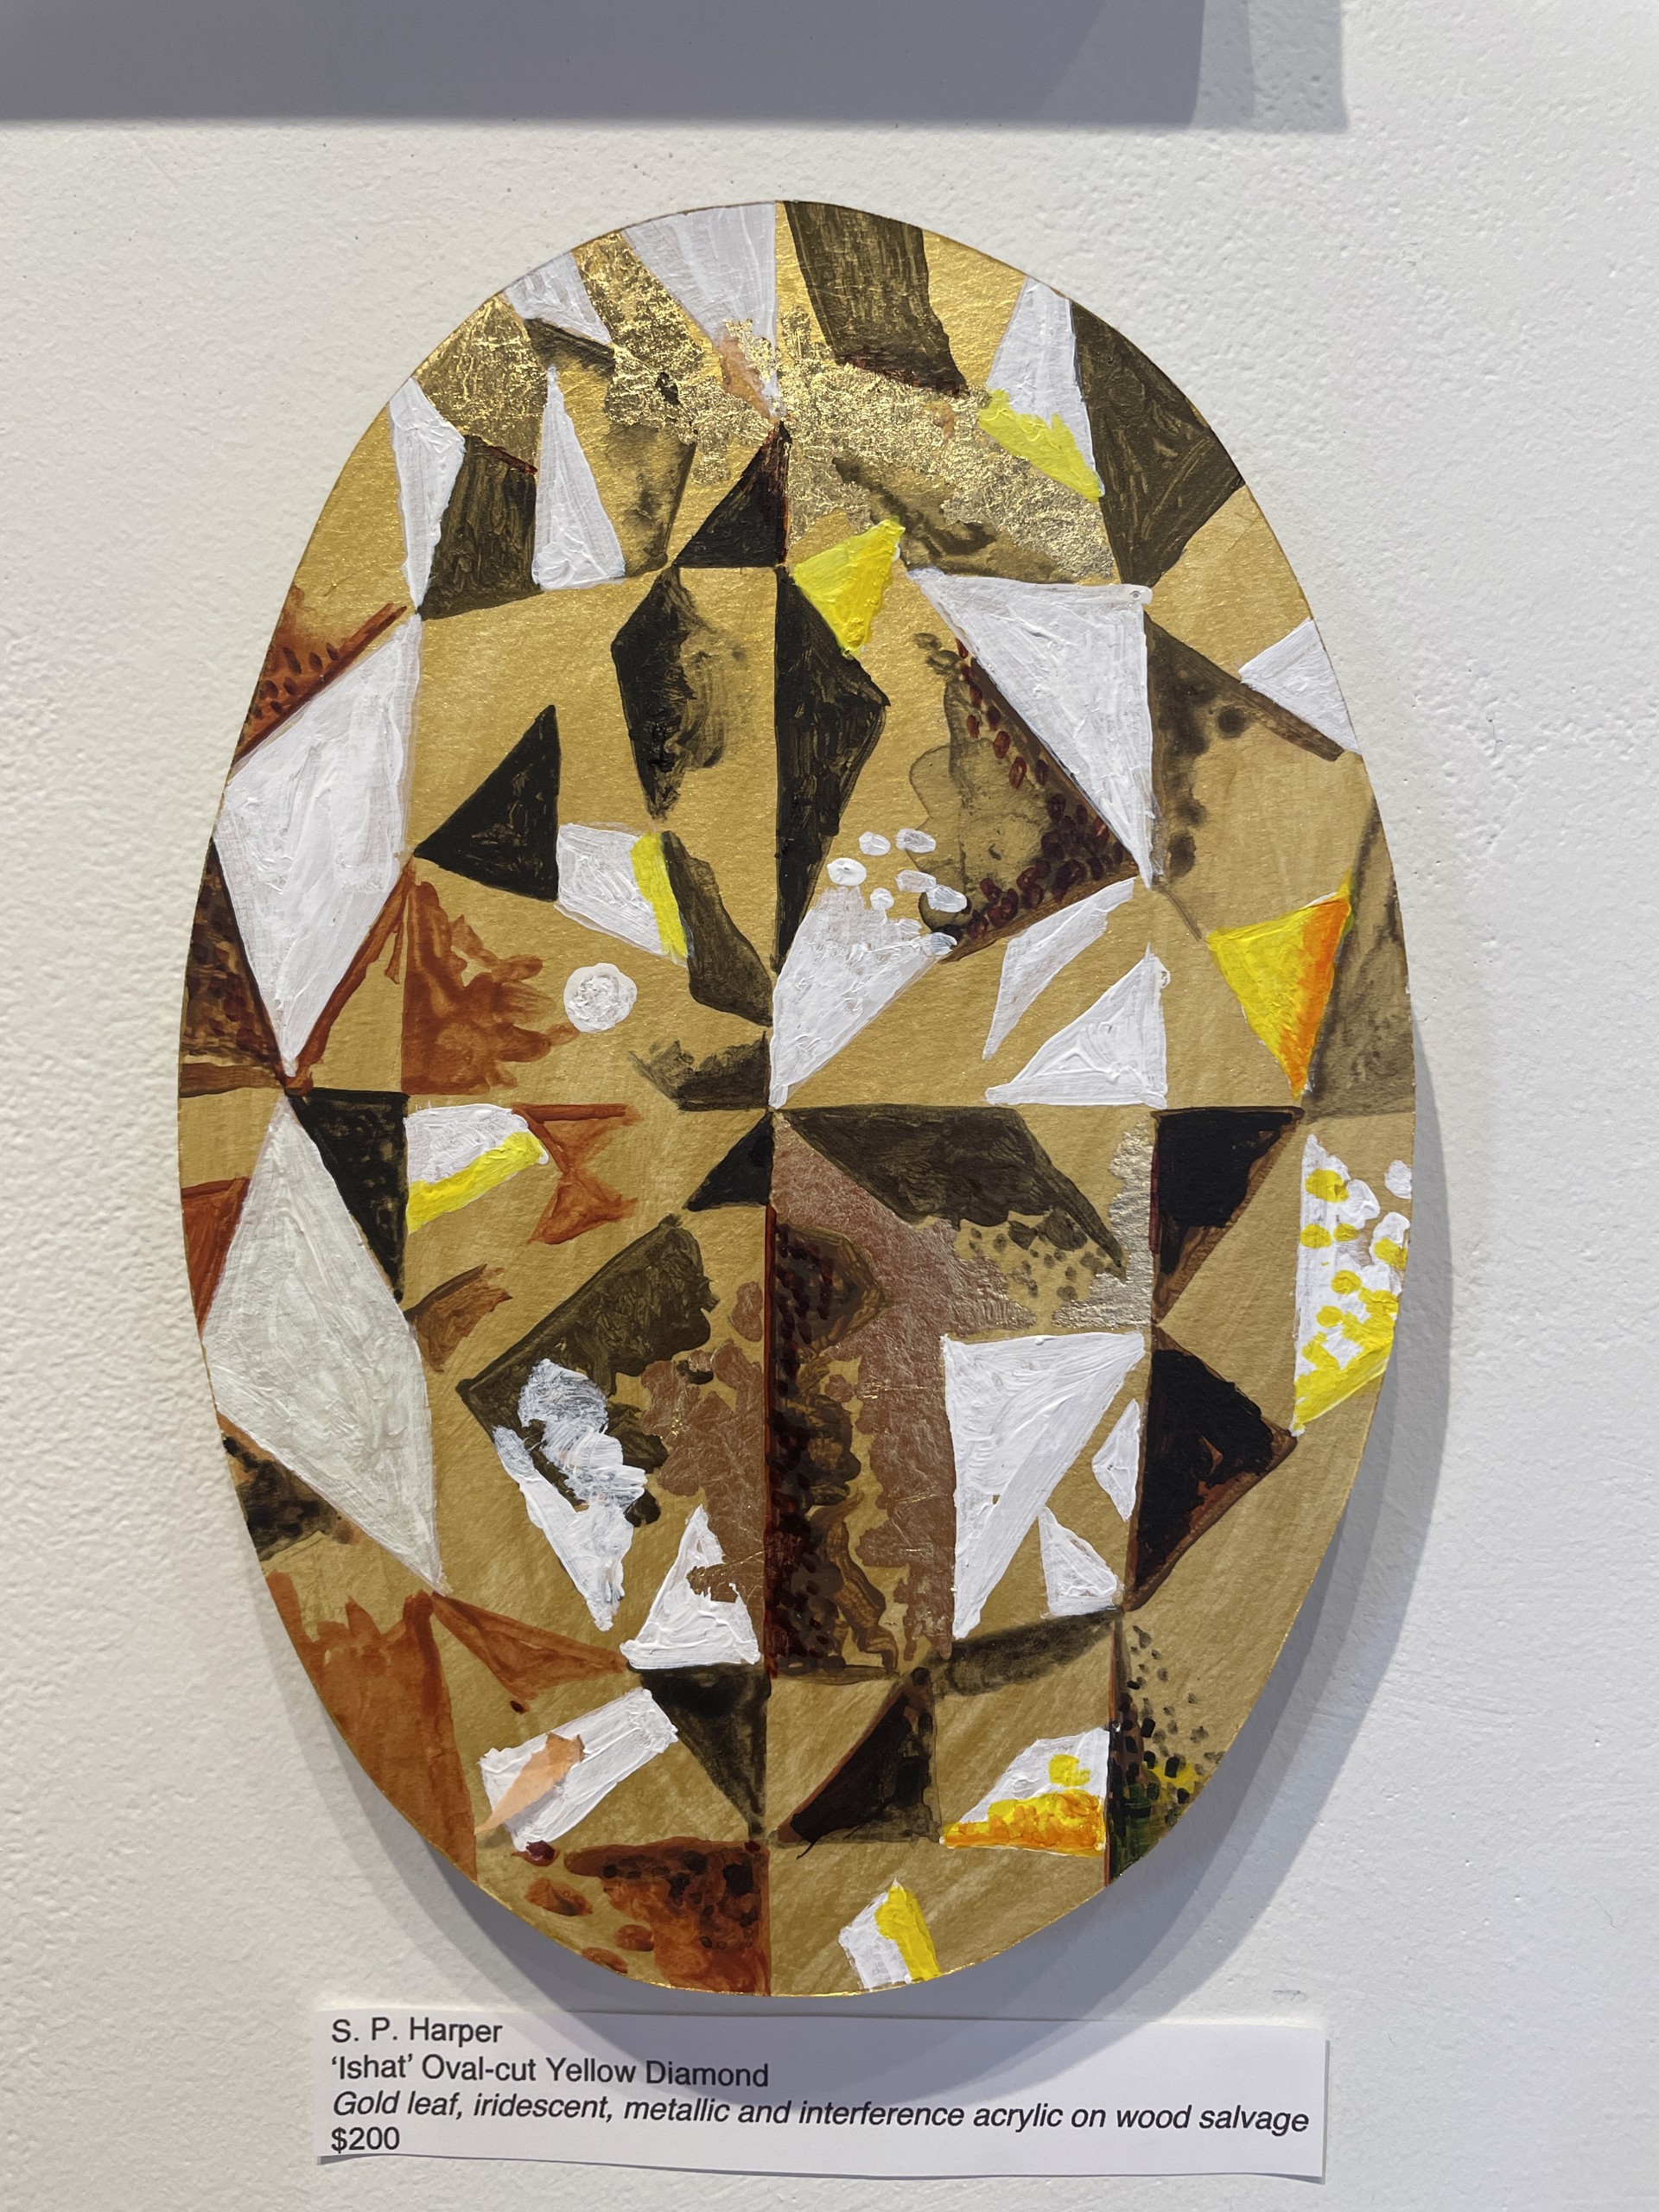 ‘Ishat’ Oval-cut Yellow Diamond by S.P. Harper